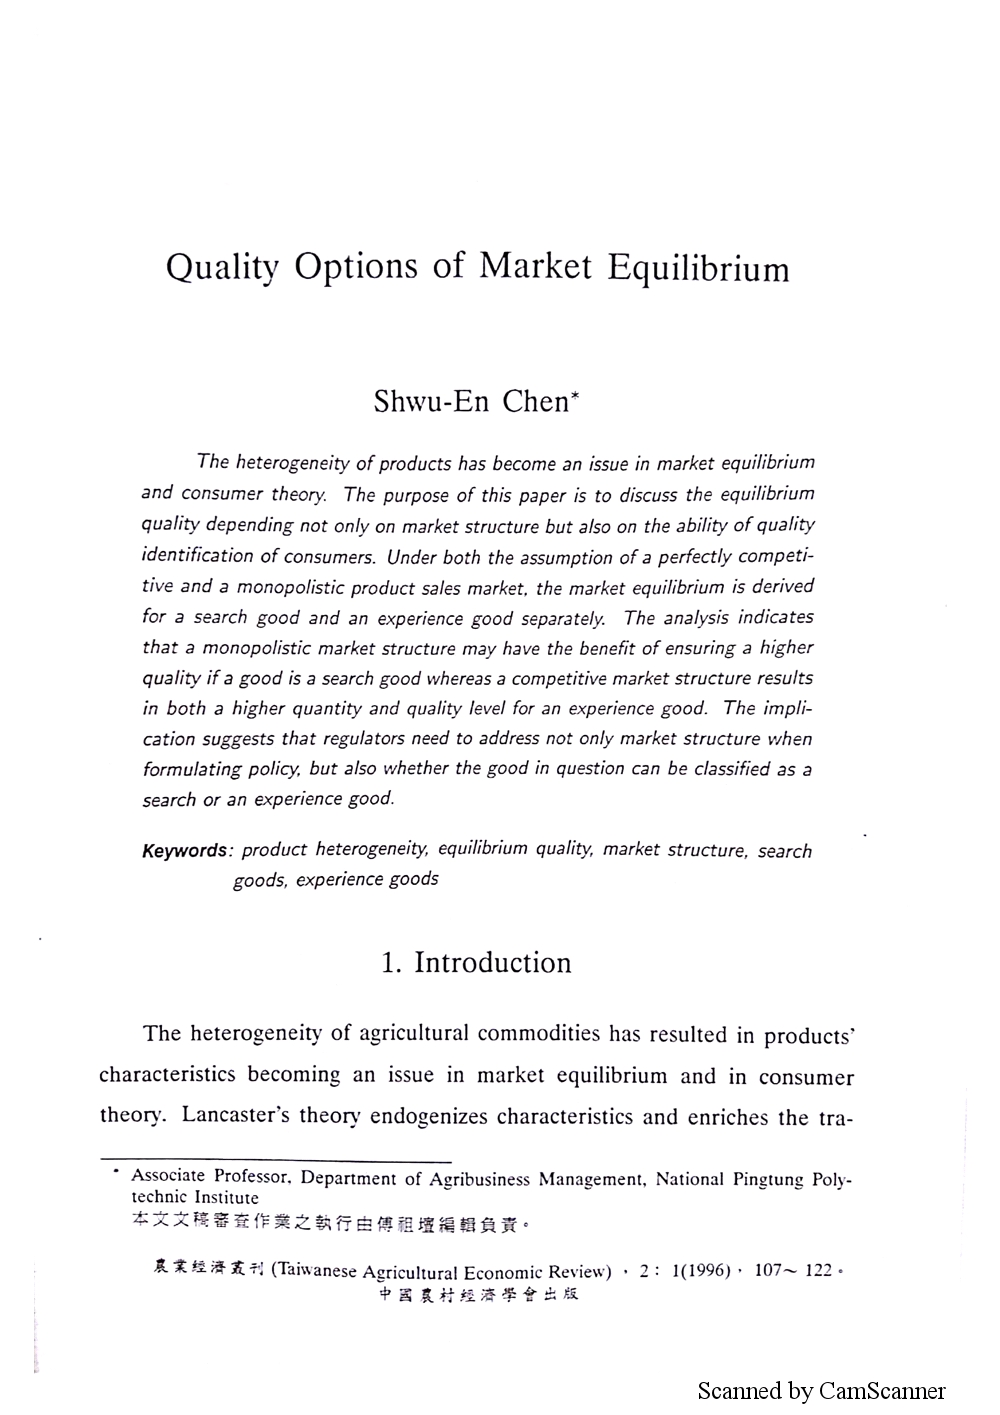 Quality_Options_of_Market_Equilibrium.jpg